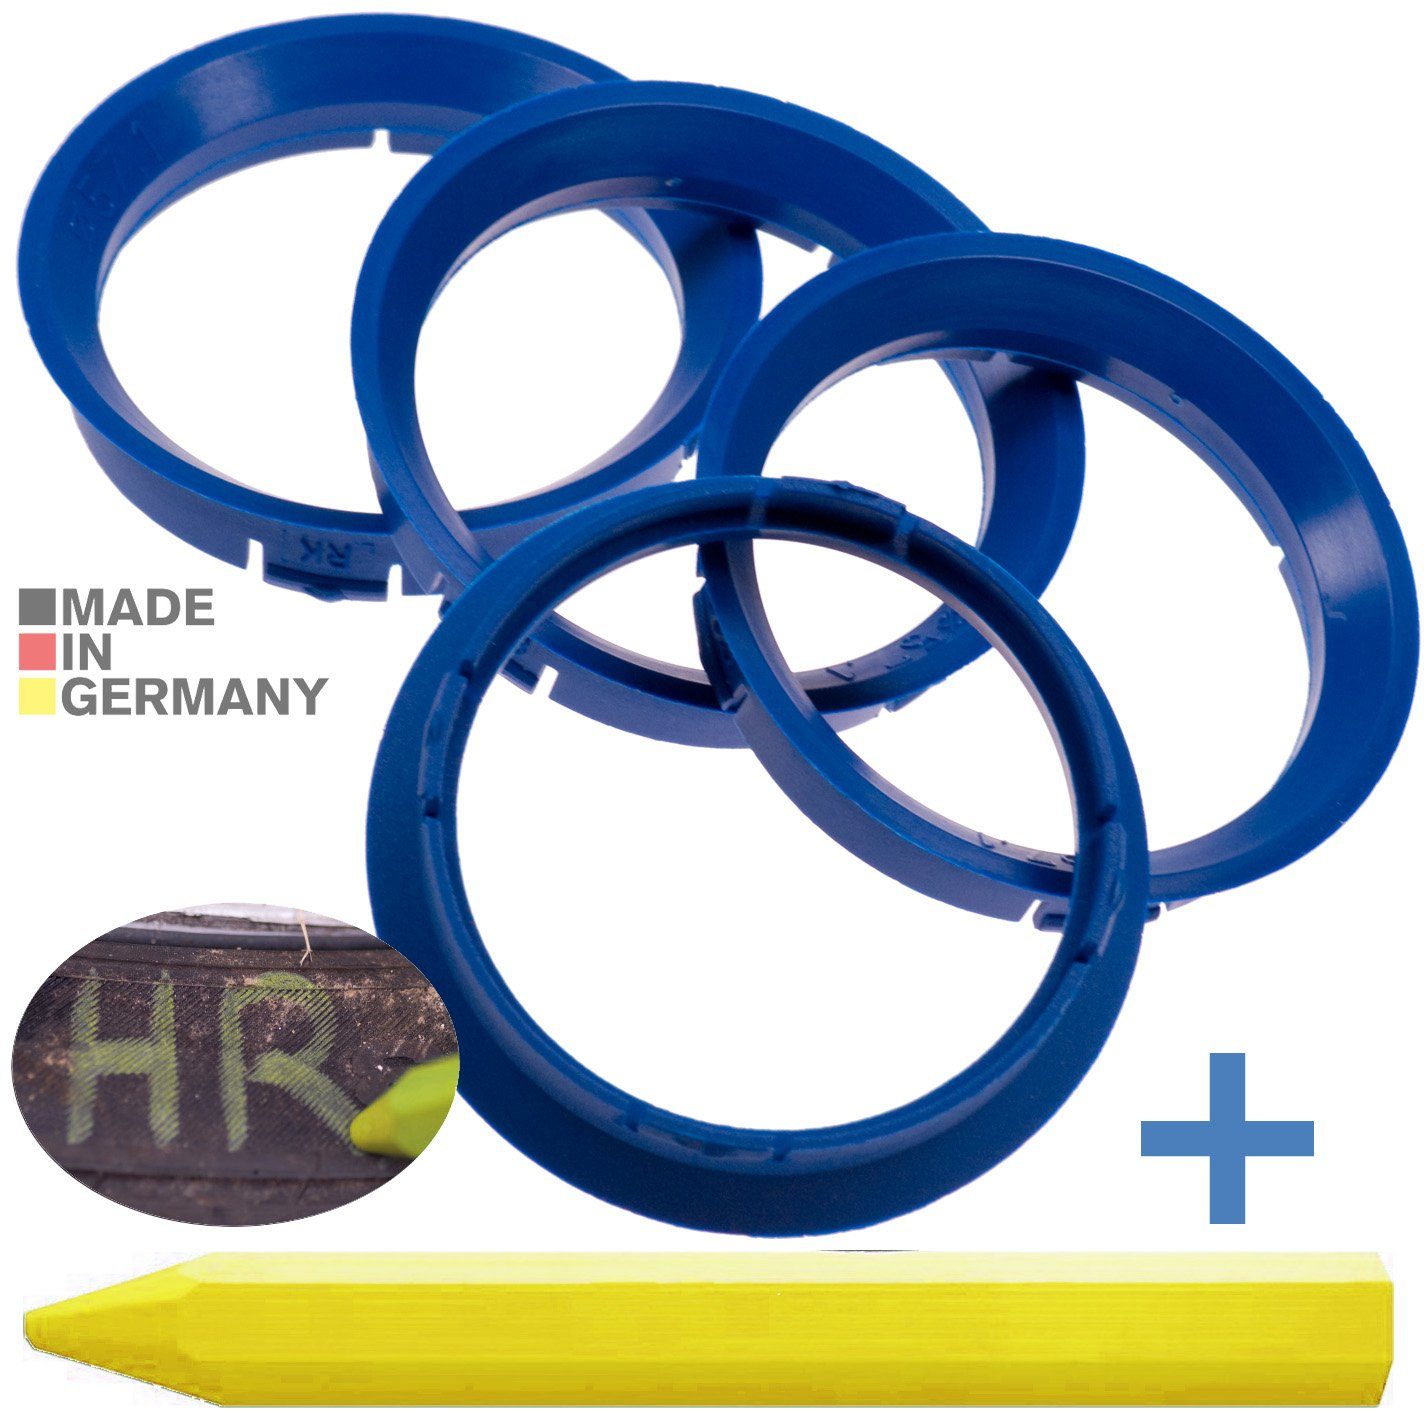 RKC Reifenstift 4X Zentrierringe Blau Felgen Ringe + 1x Reifen Kreide Fett Stift, Maße: 63,3 x 57,1 mm | Reifenstifte